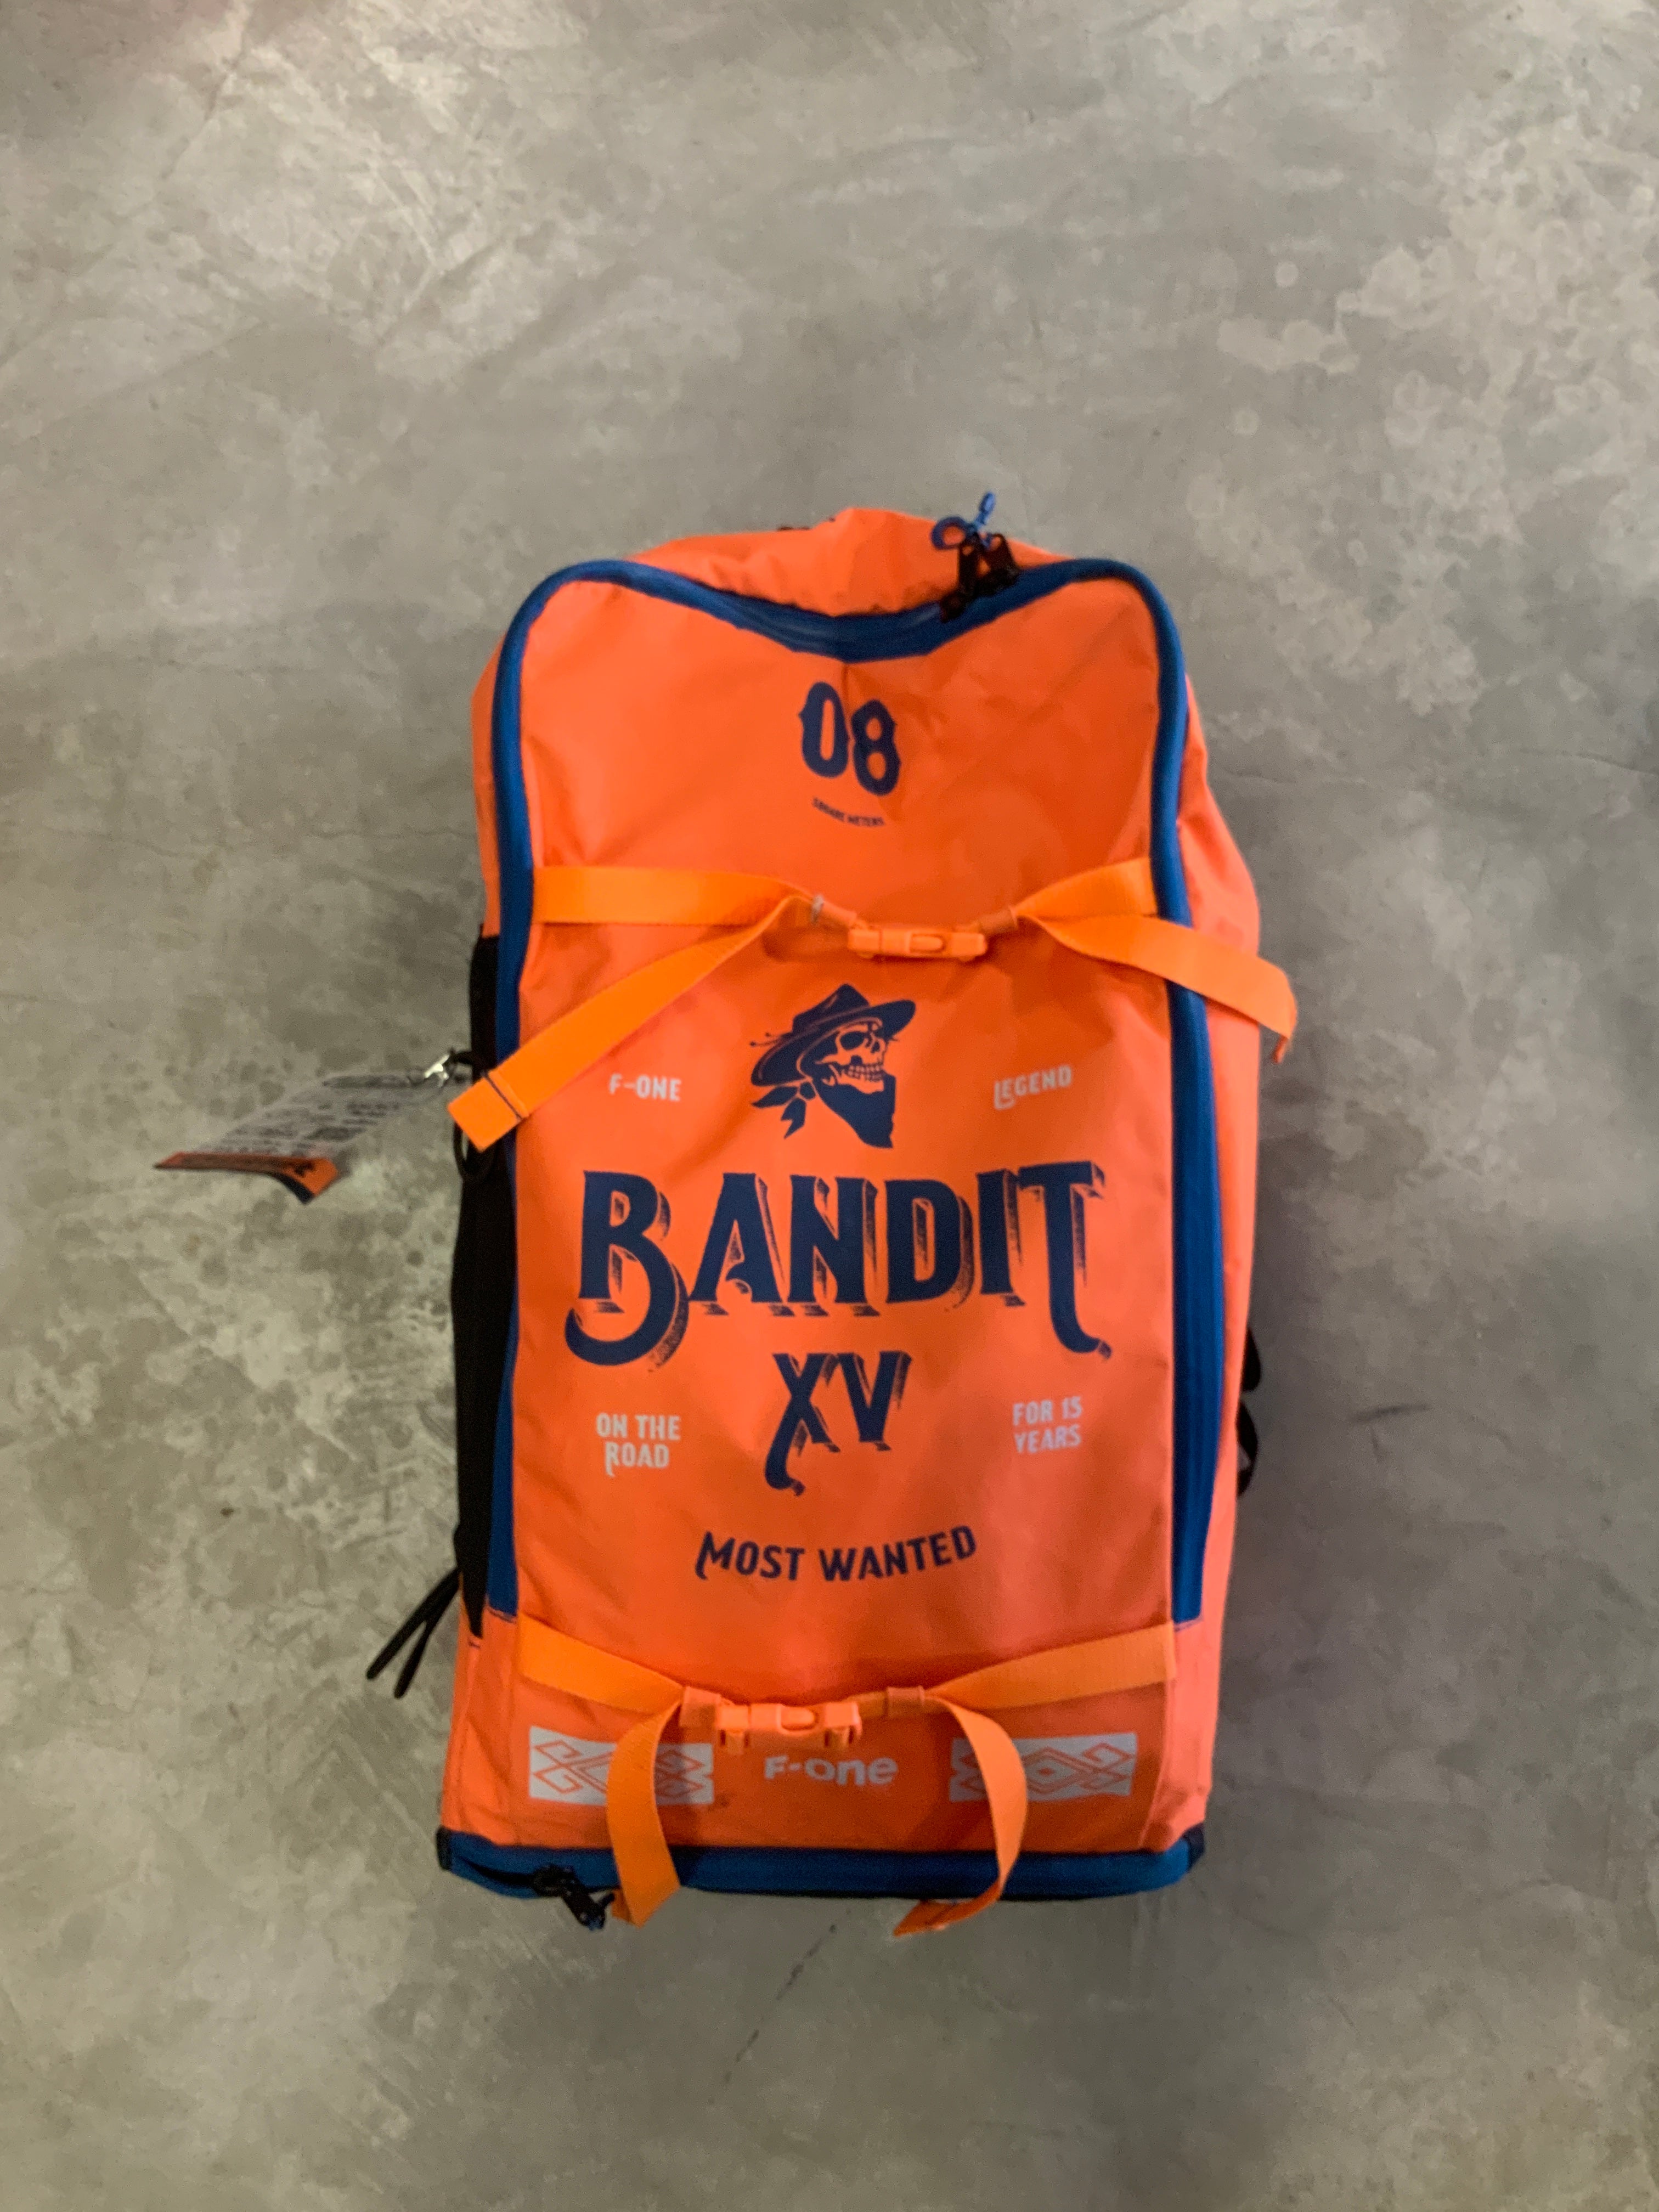 BANDIT XV - F-ONE